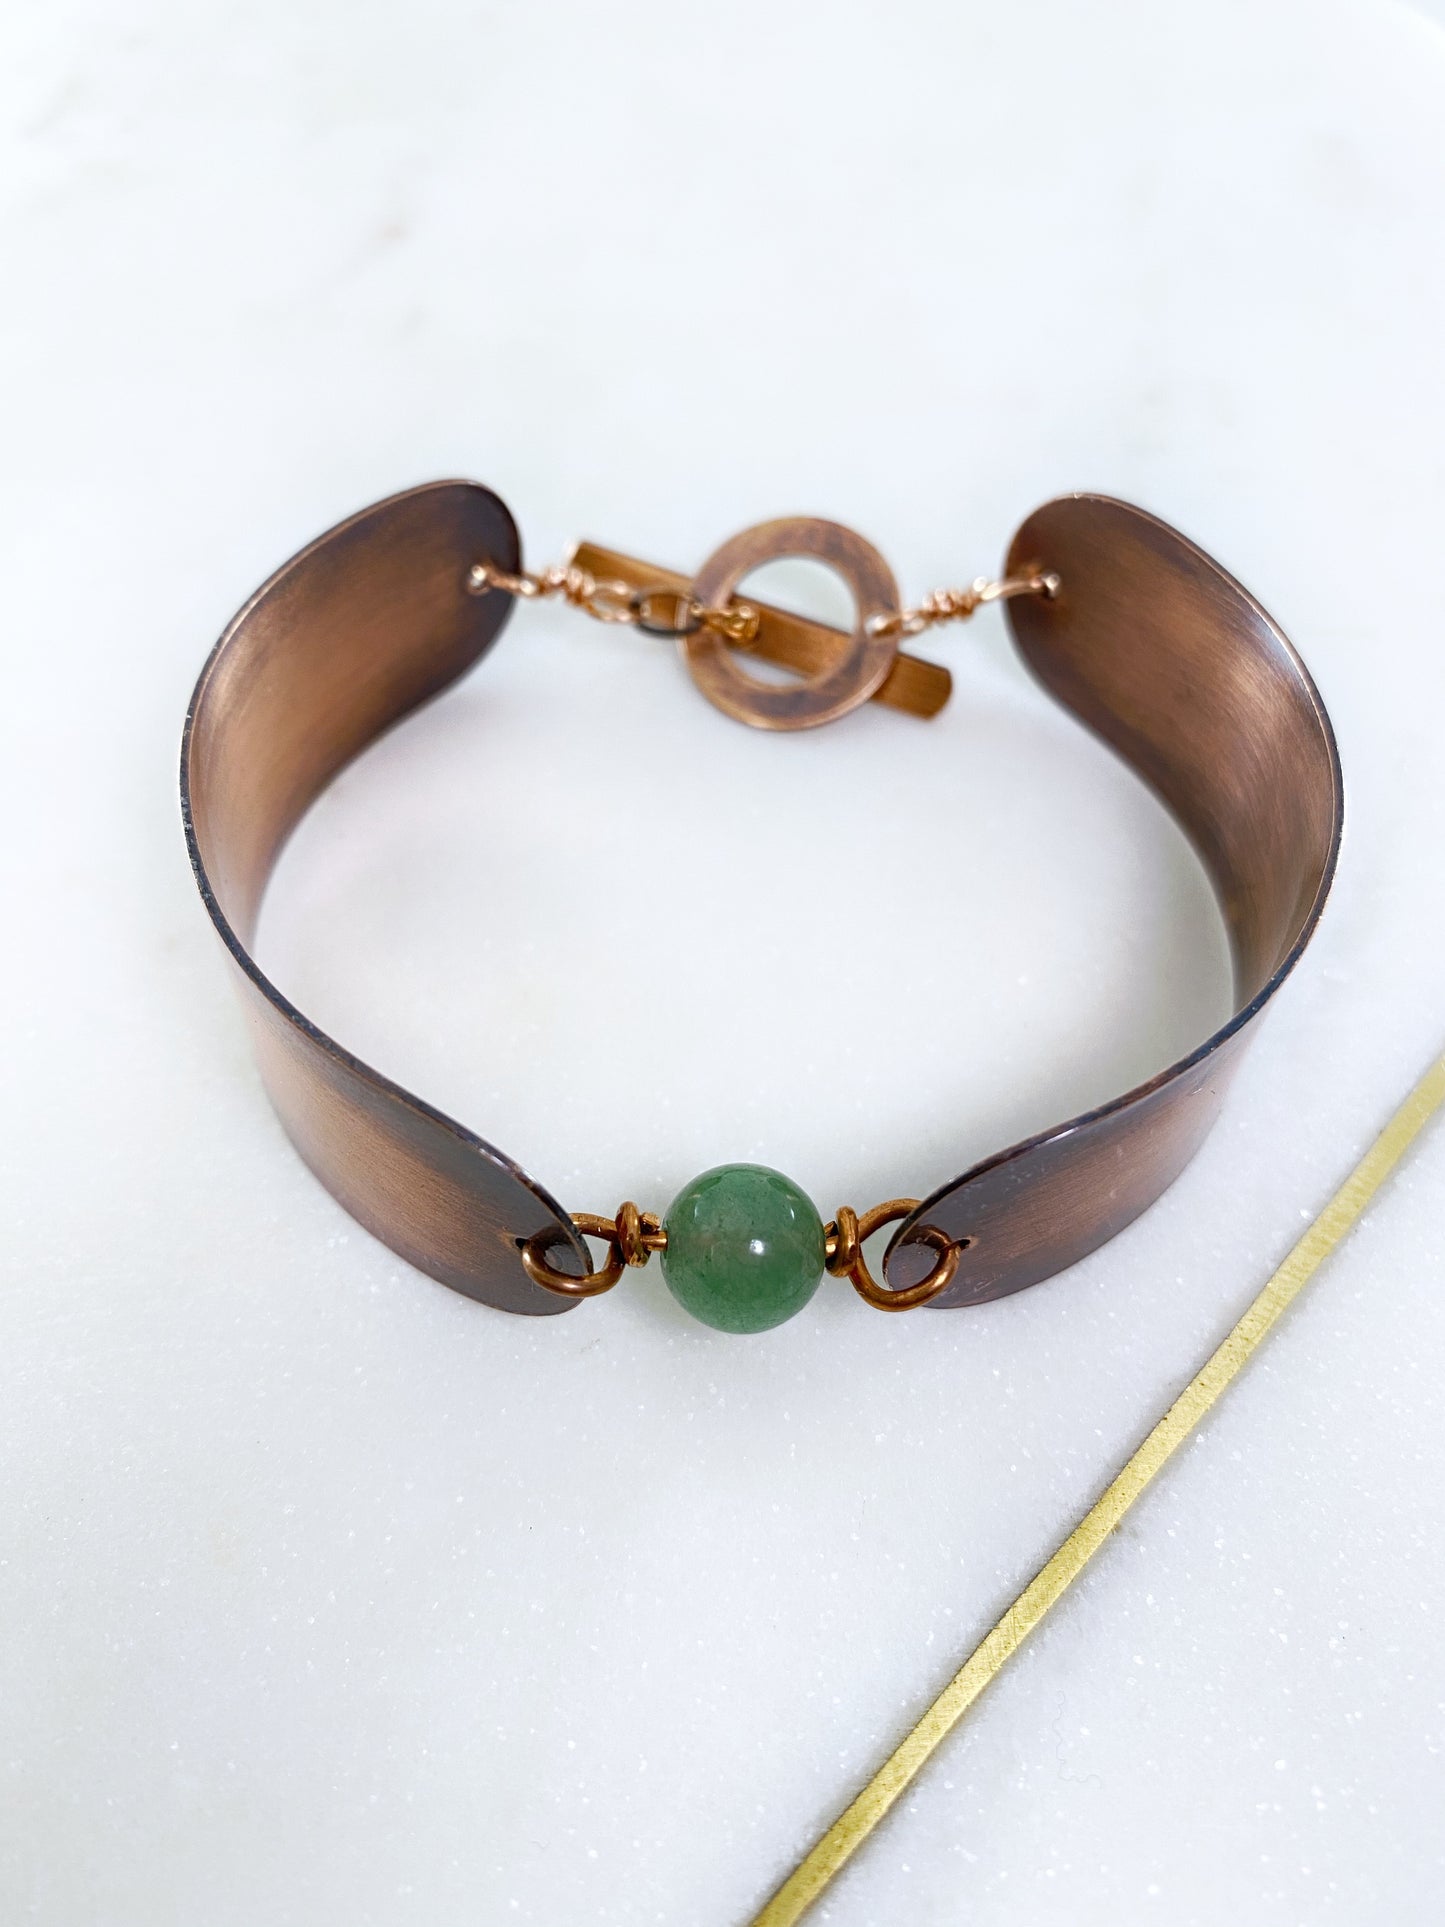 Copper and aventurine bracelet